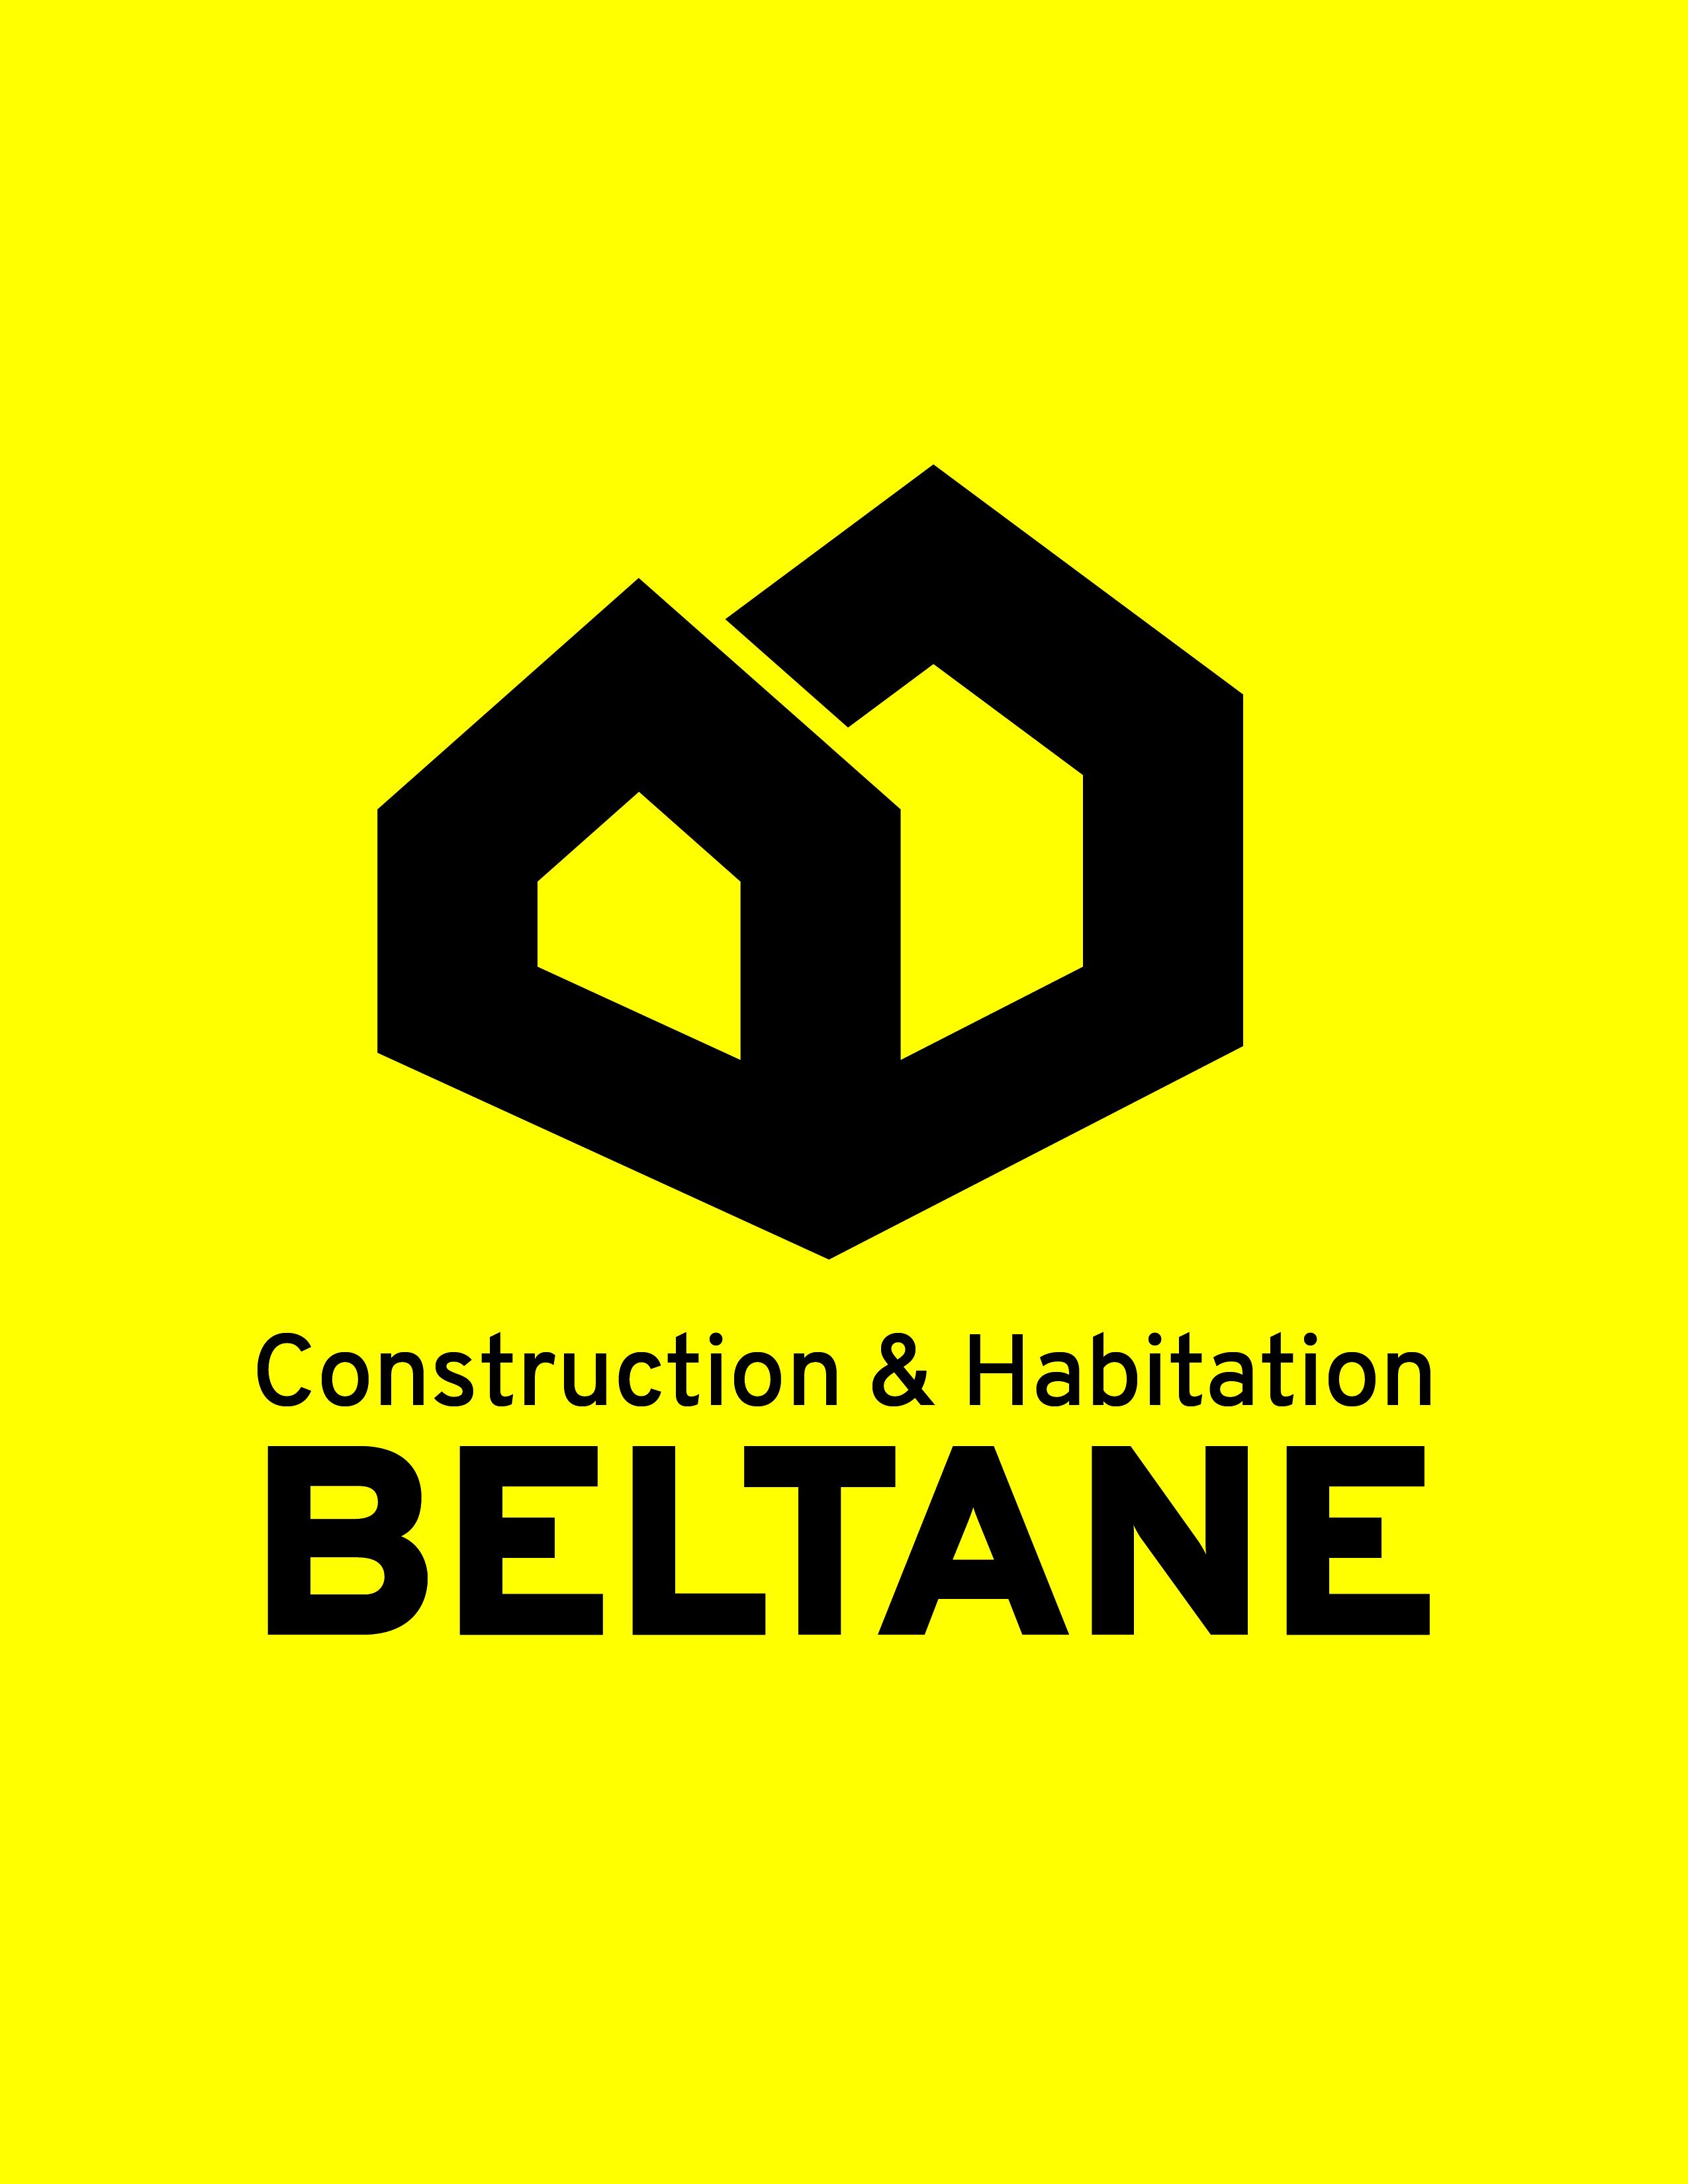 Construction & Habitation Beltane inc.